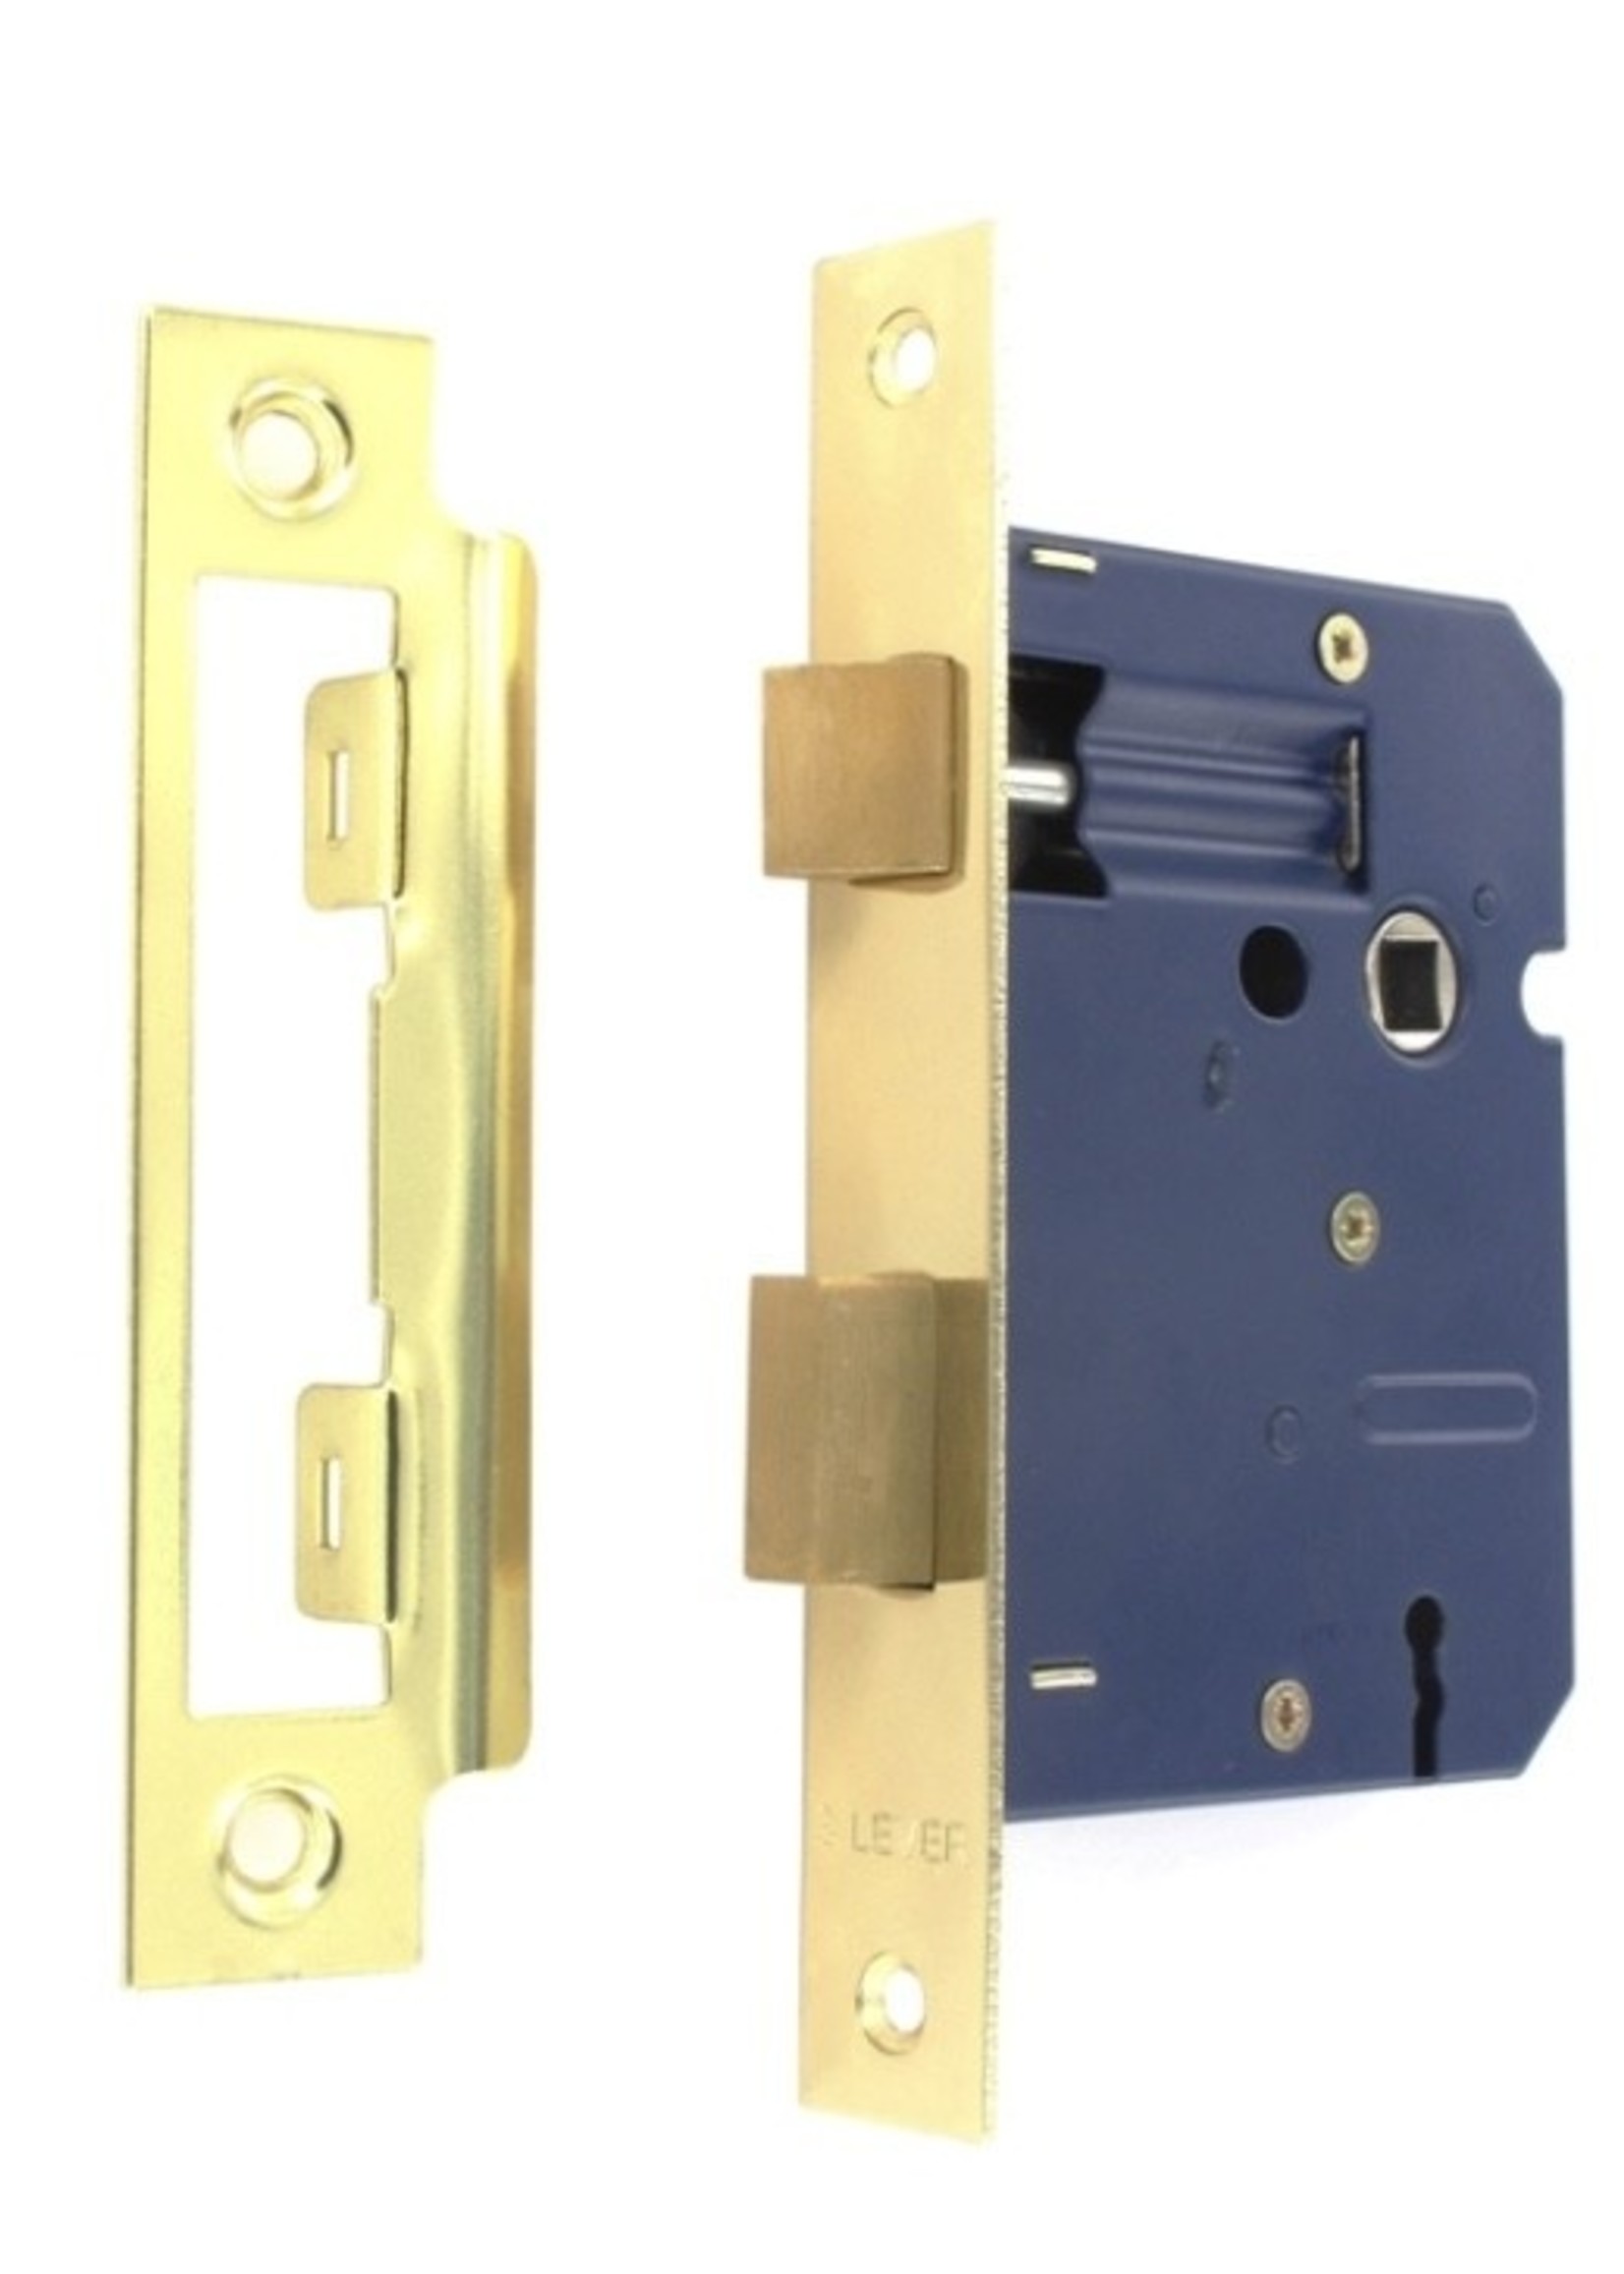 Securit Sash Lock 3 Lever with 2 Keys EB 75mm S1833